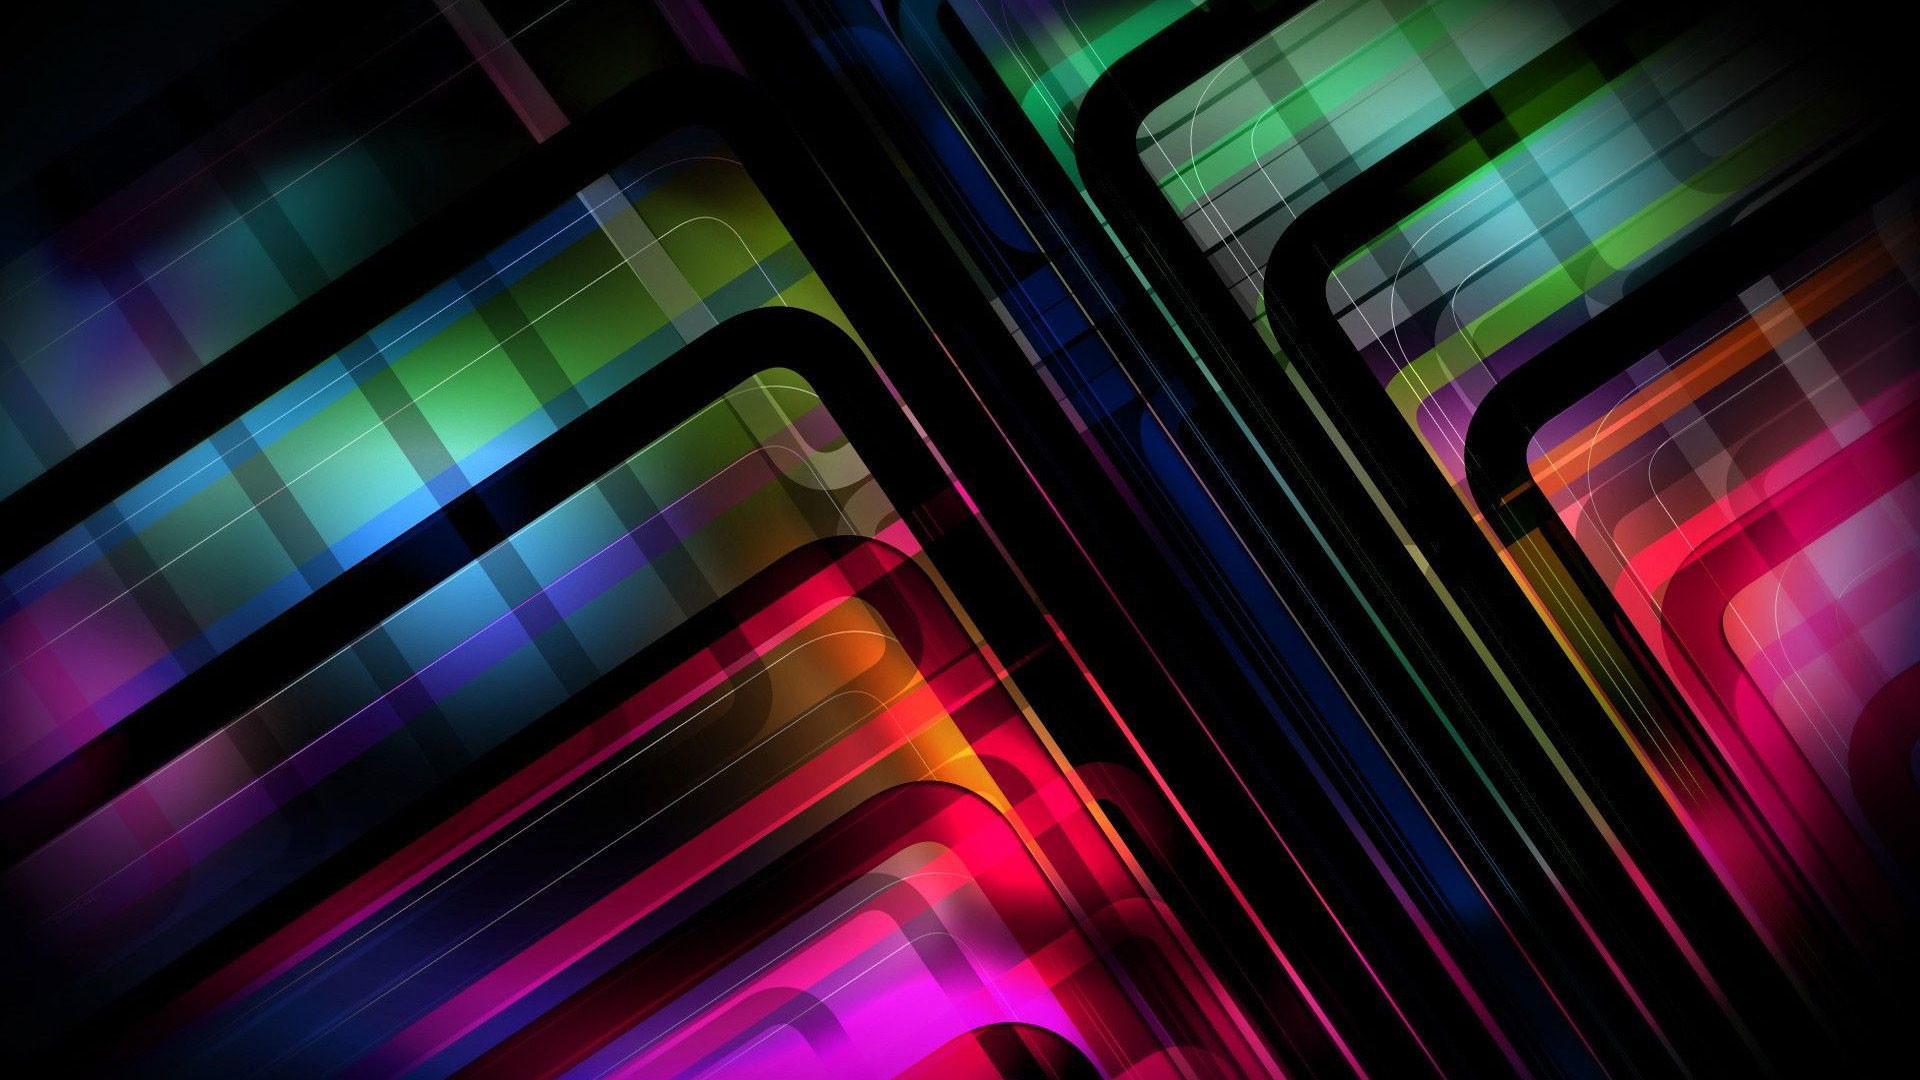 1920x1080 hd pics photos neon abstract colors wallpaper desktop background wallpaper